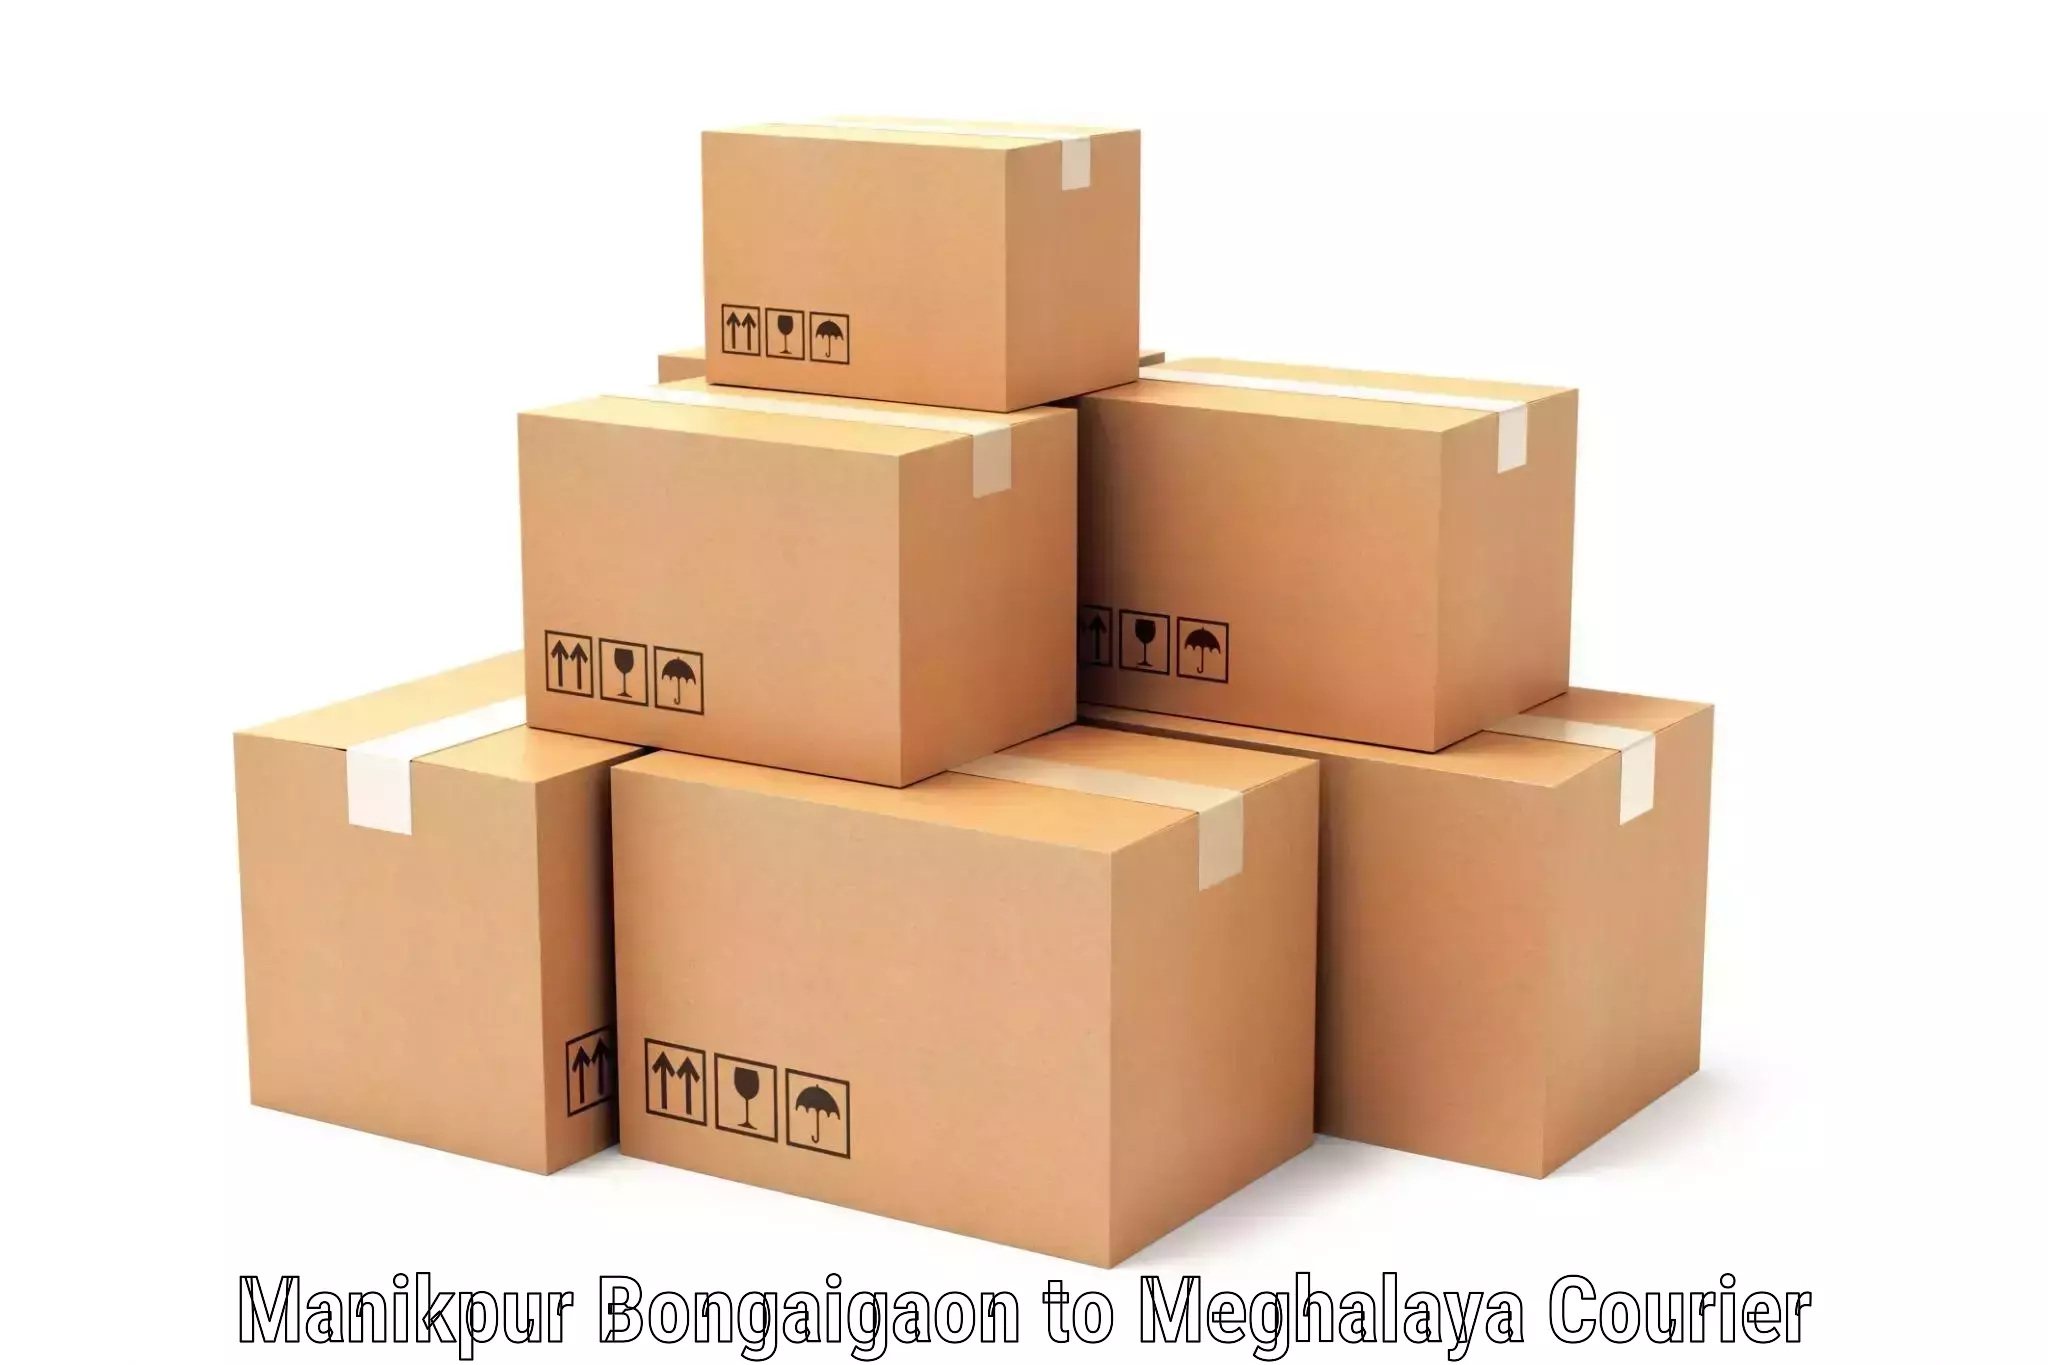 Professional courier handling Manikpur Bongaigaon to Dkhiah West